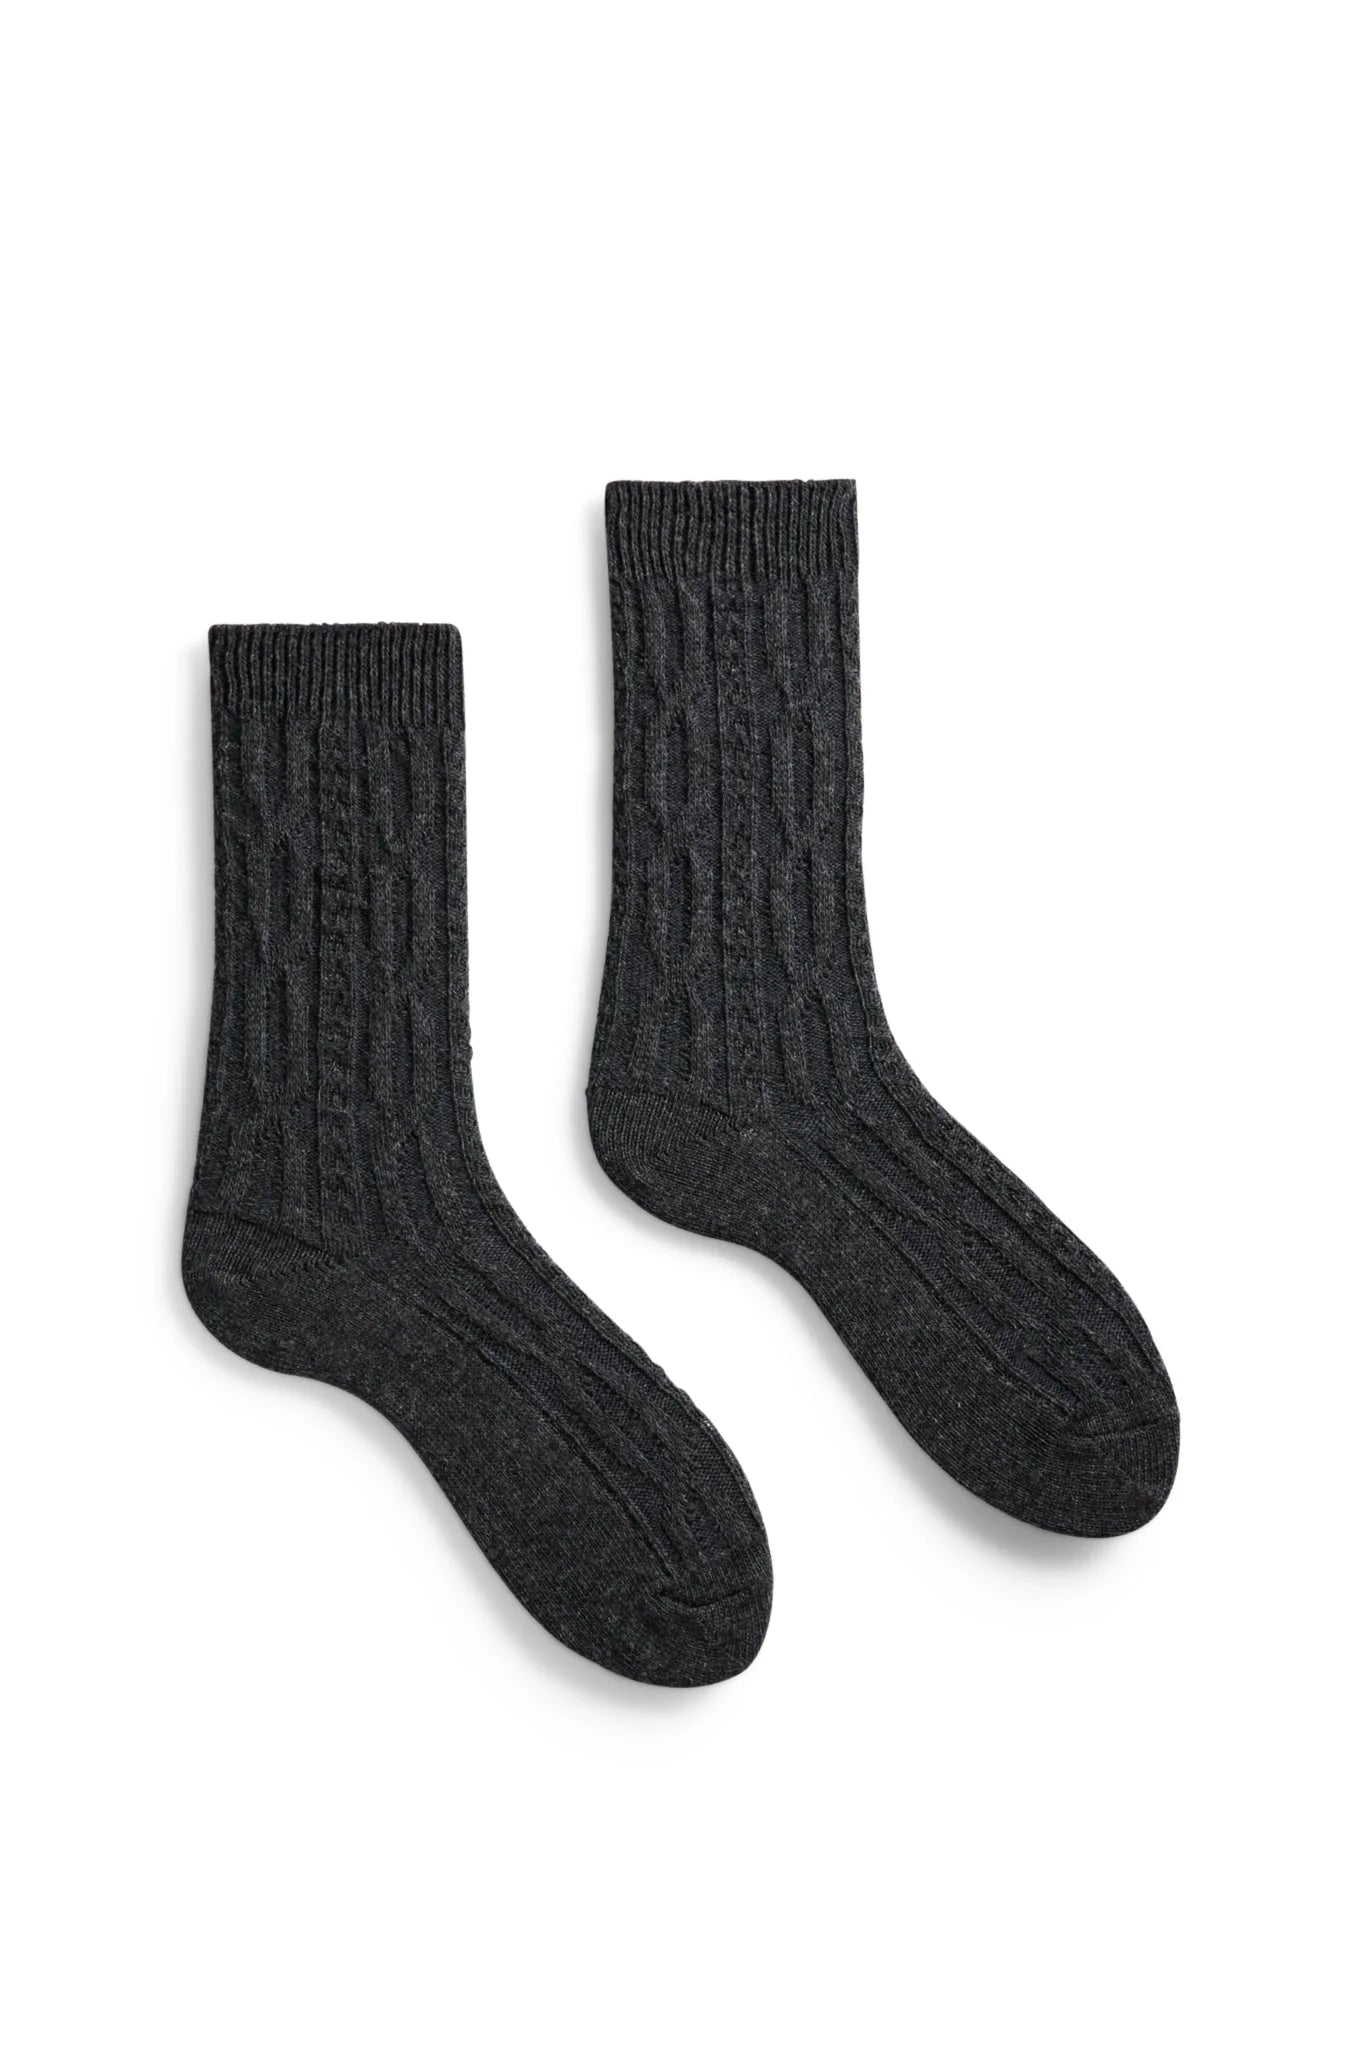 lisa b. / chunky cable wool cashmere crew socks